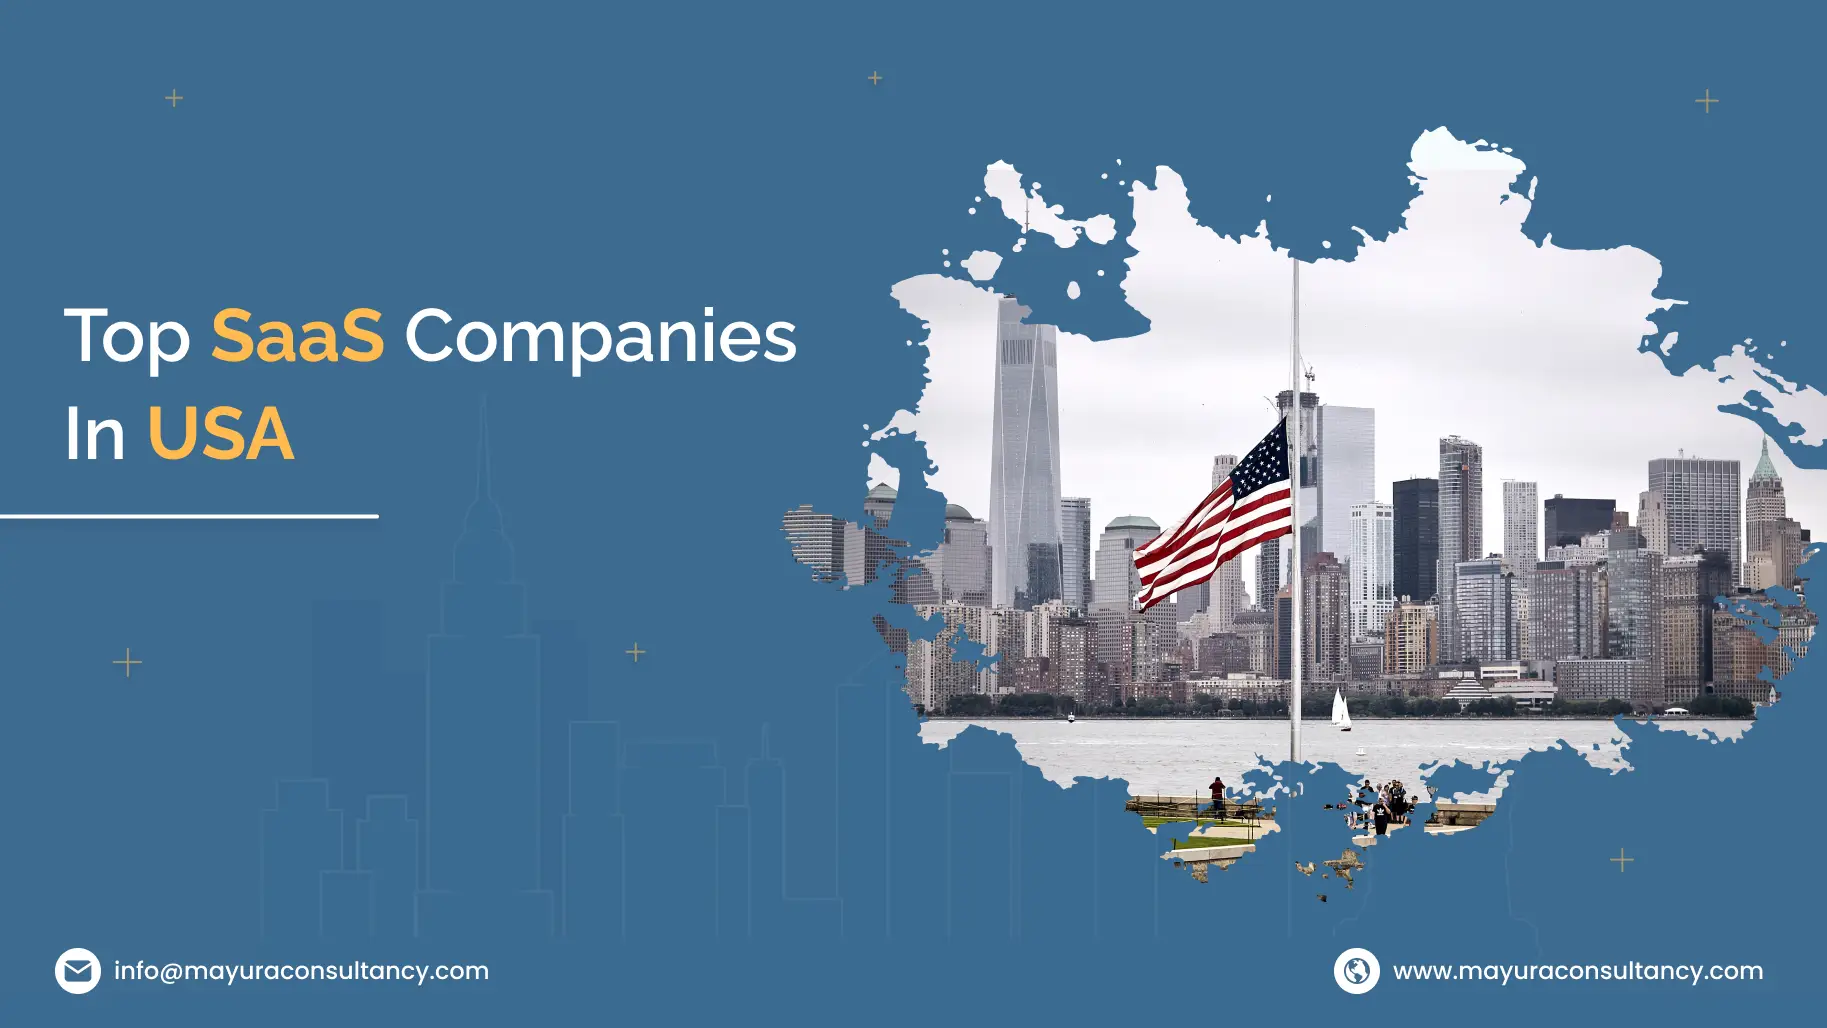 Top SaaS Companies in USA